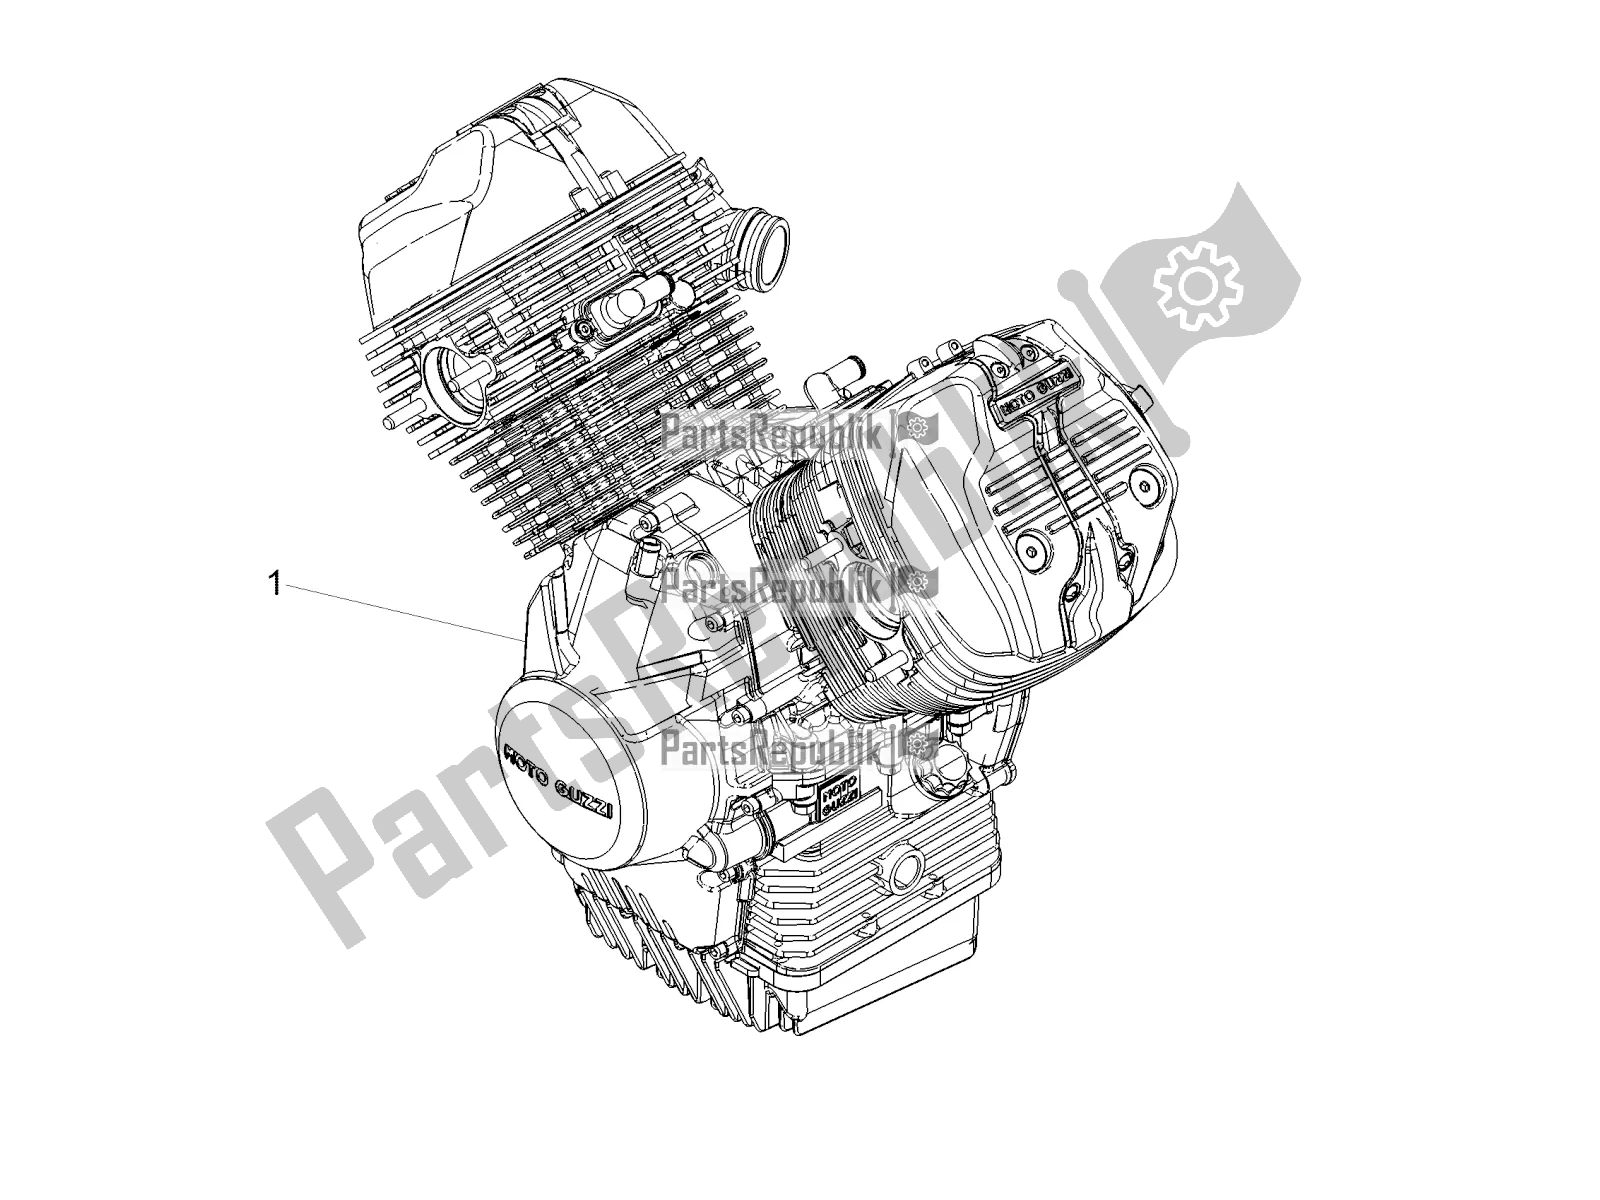 Todas las partes para Palanca Parcial Completa Del Motor de Moto-Guzzi V7 III Stone 750 E4 2019 Emea 2019